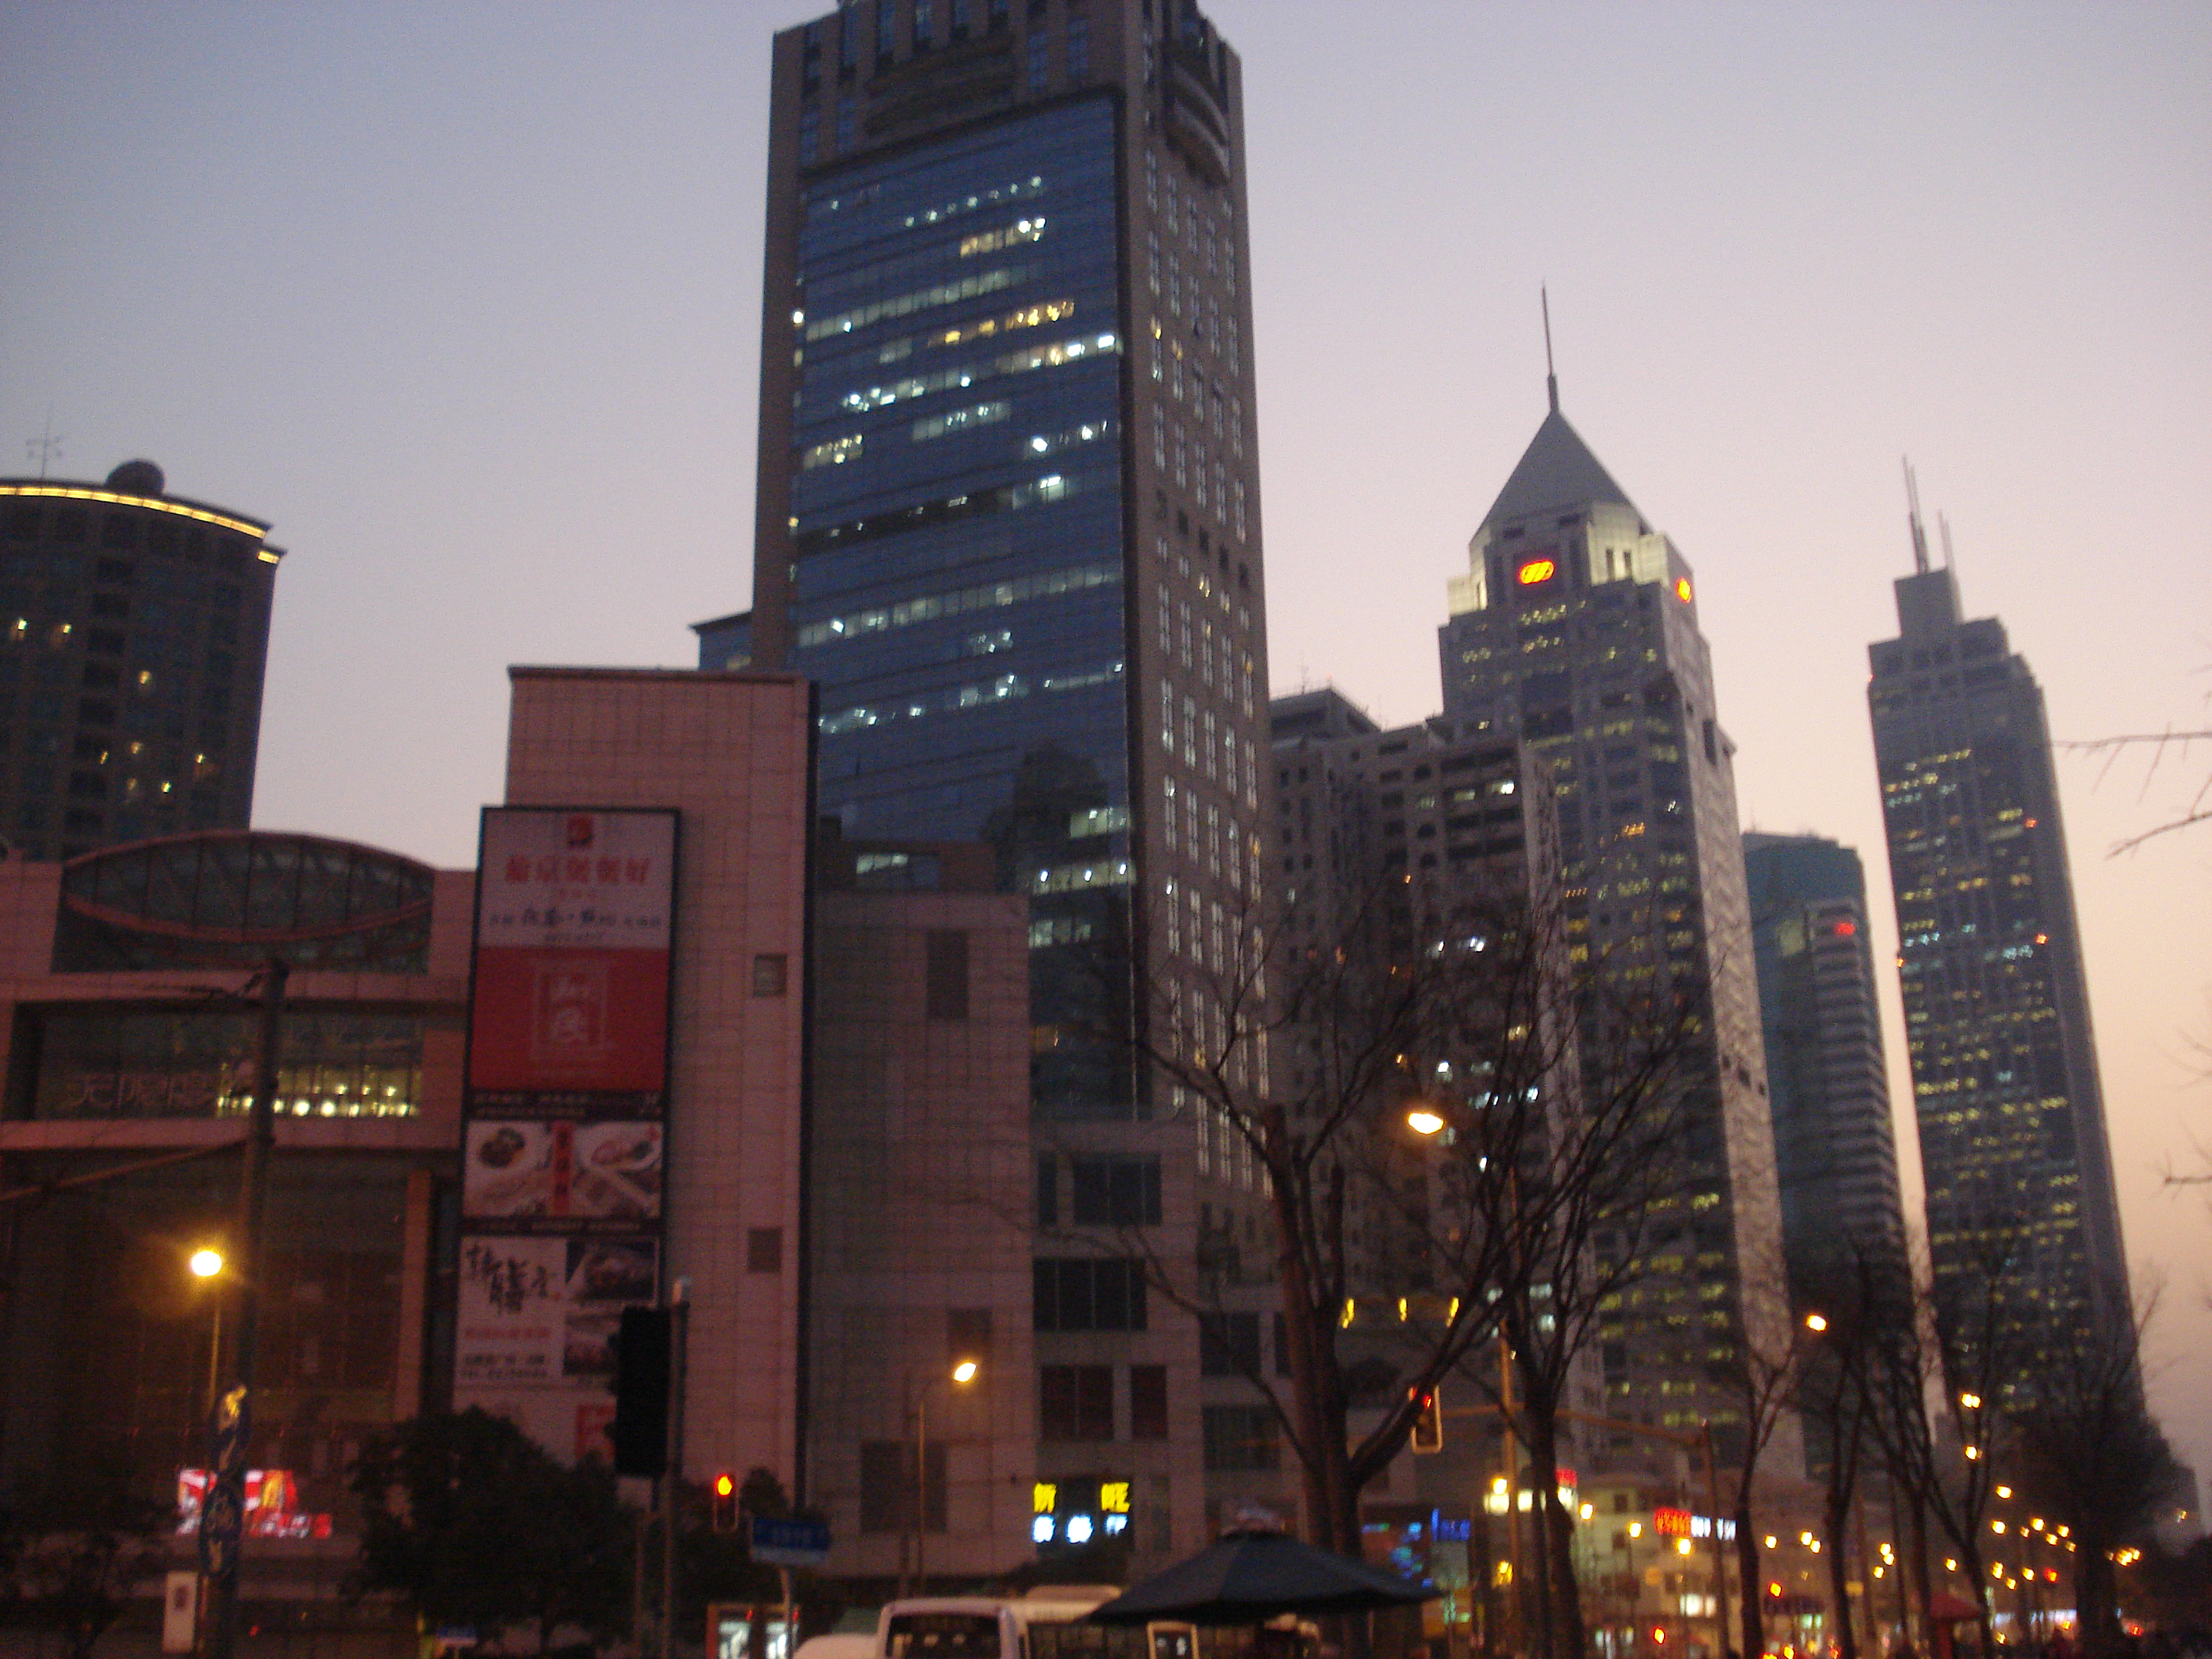 Shanghai - People's Square